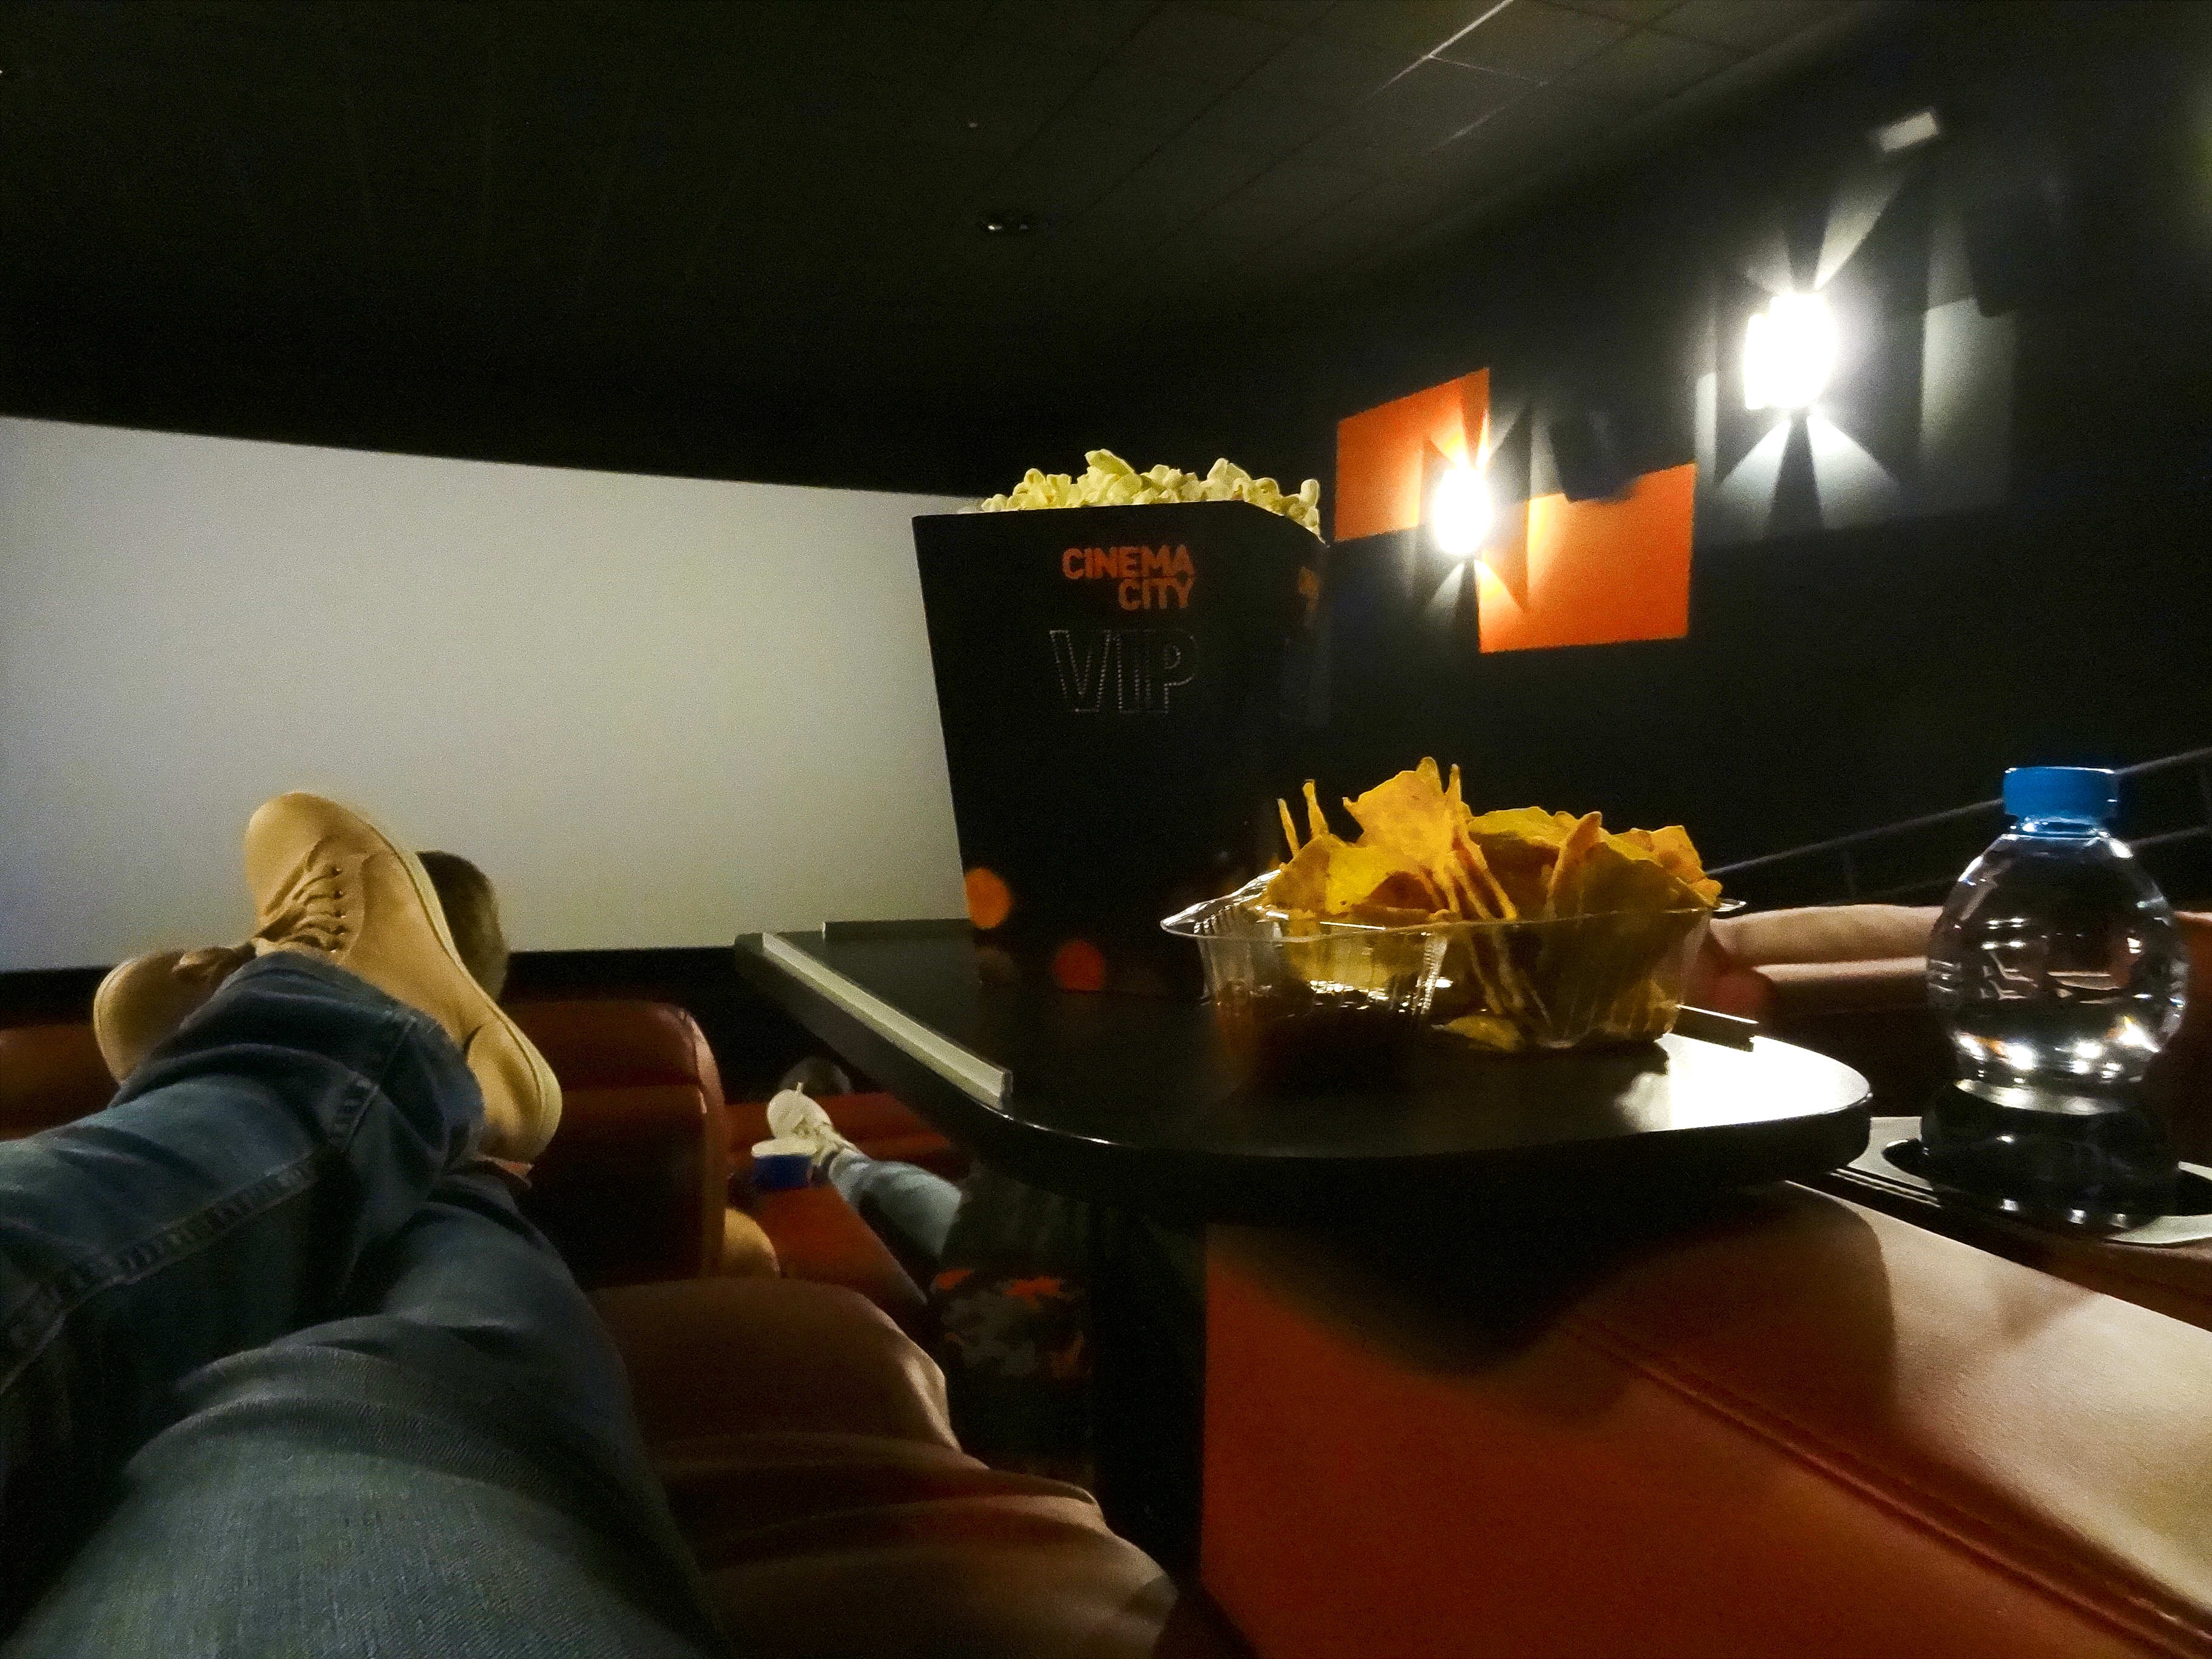 Cinema city vip angellovesdreams kino innego wymiaru relax chill nachos popcorn sala kinowa